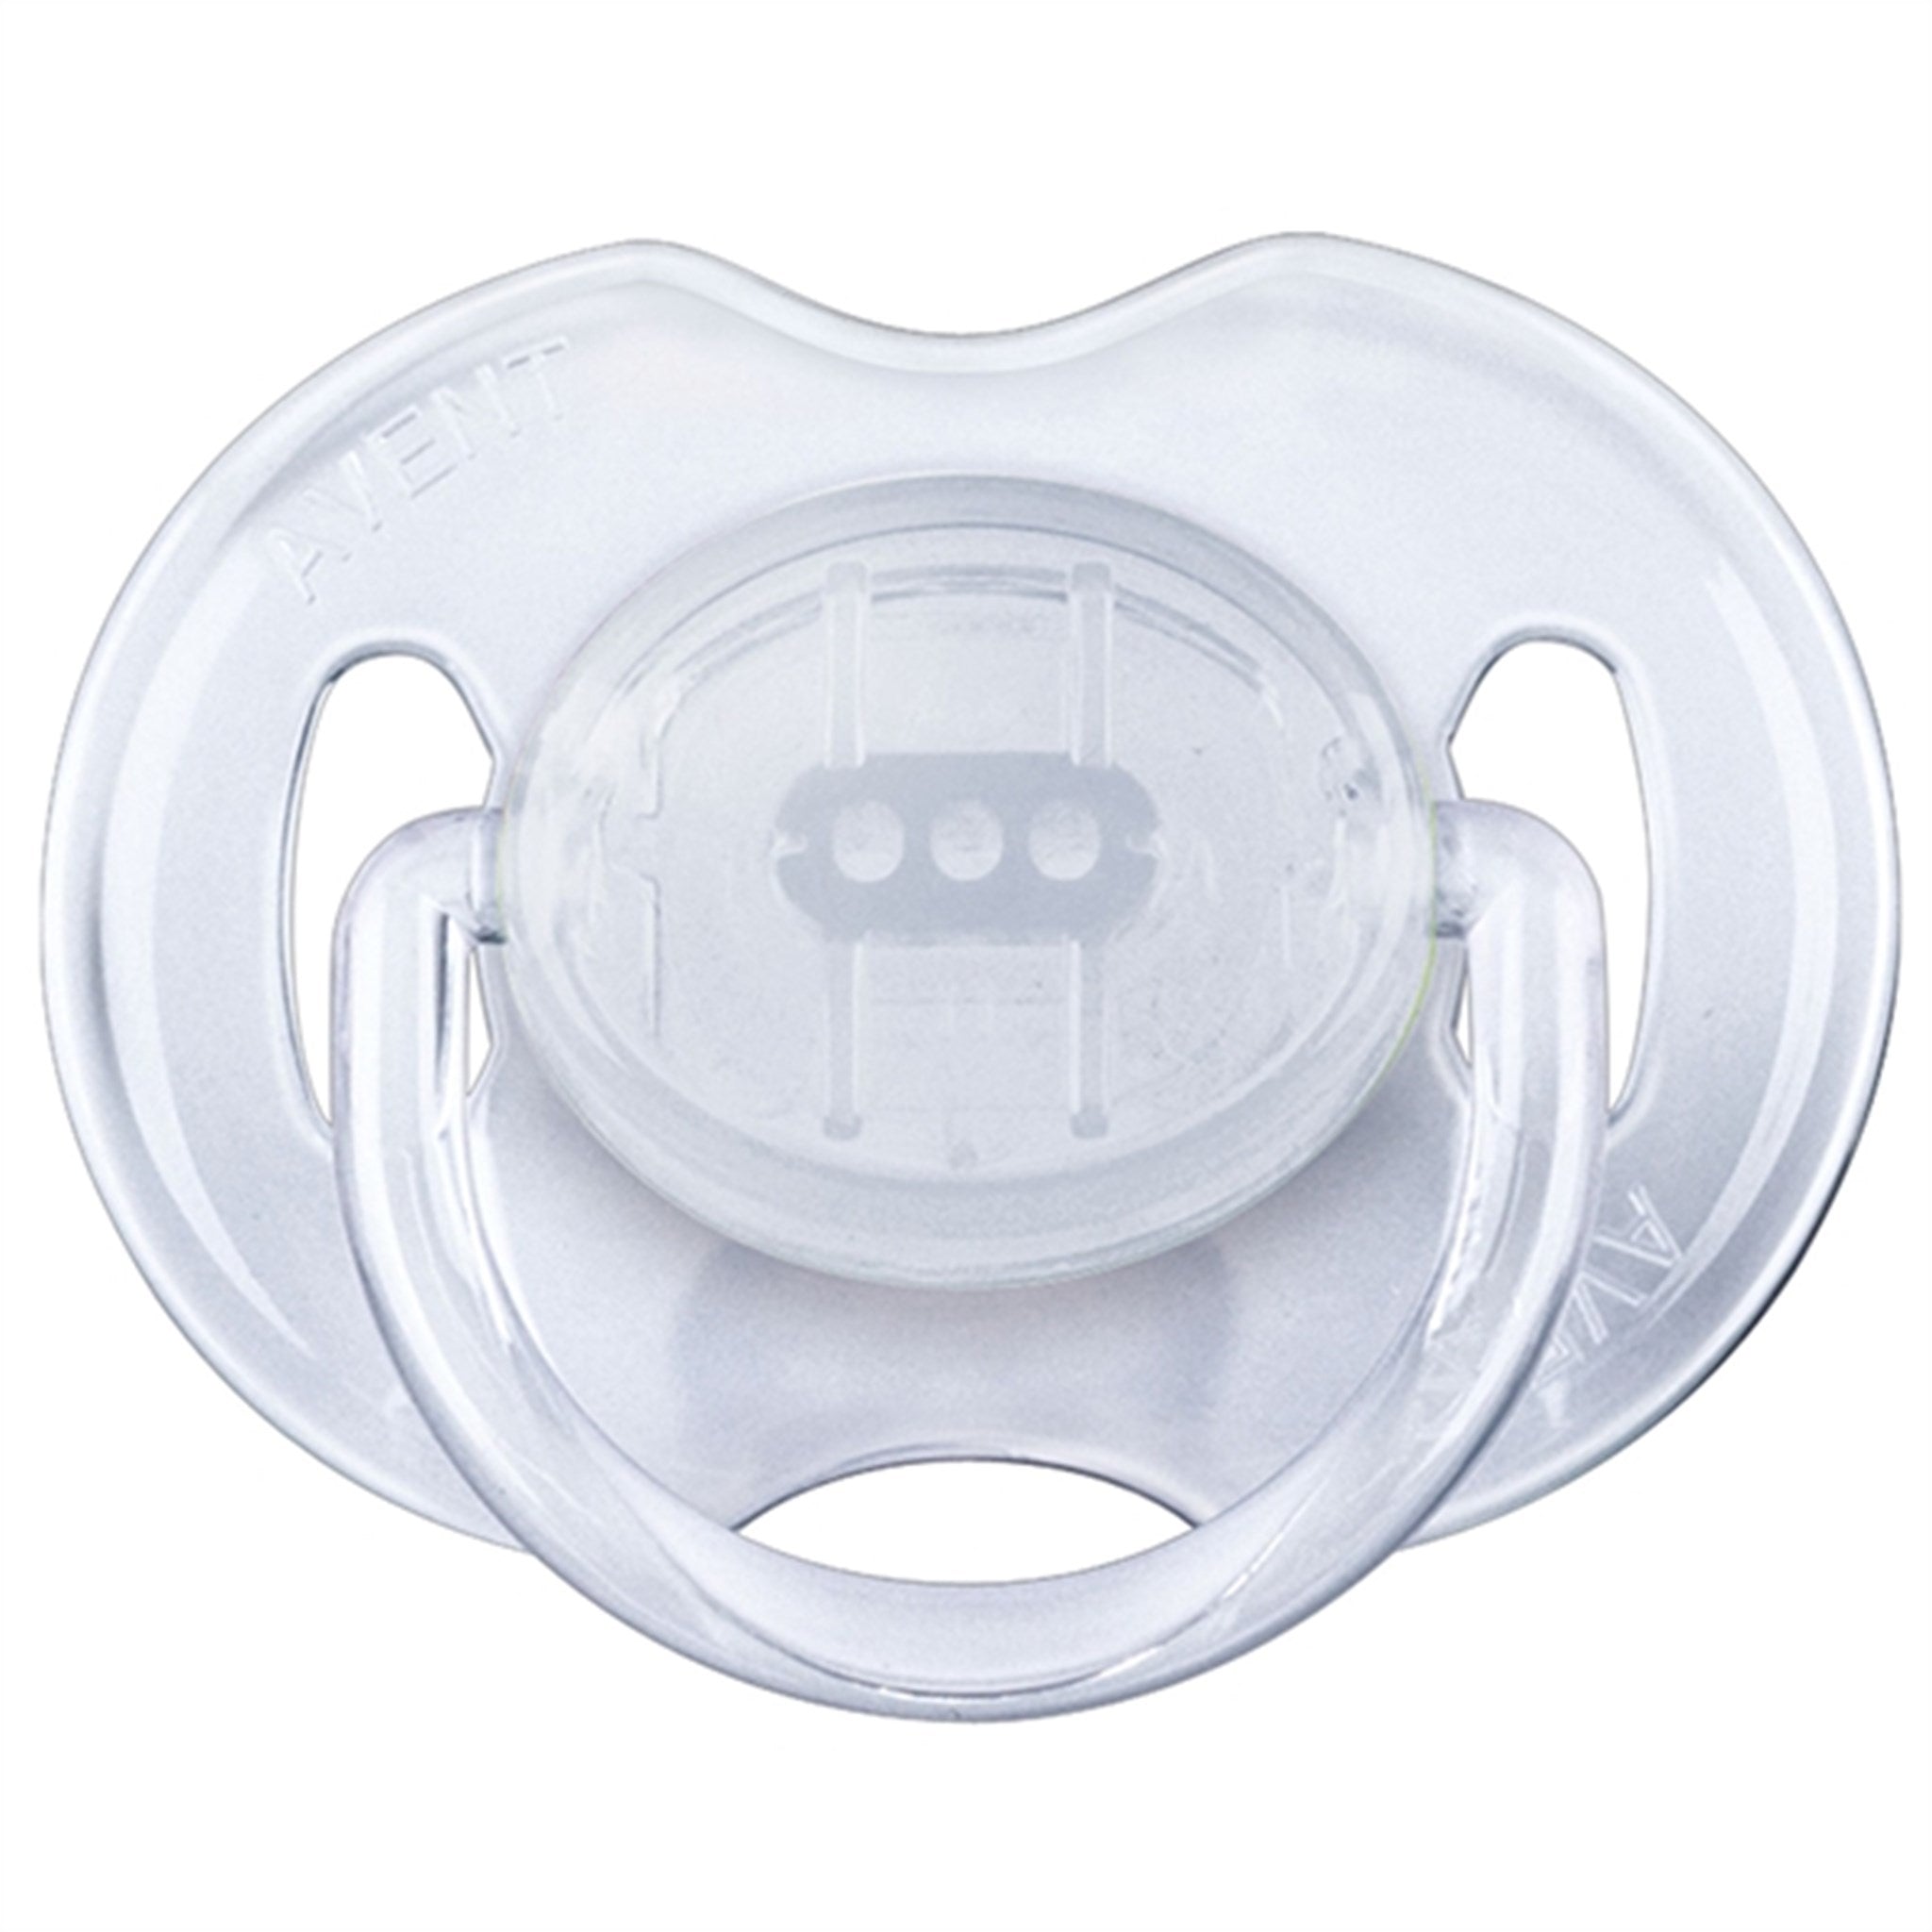 Philips Avent Natural Starter Set For Newborns 4